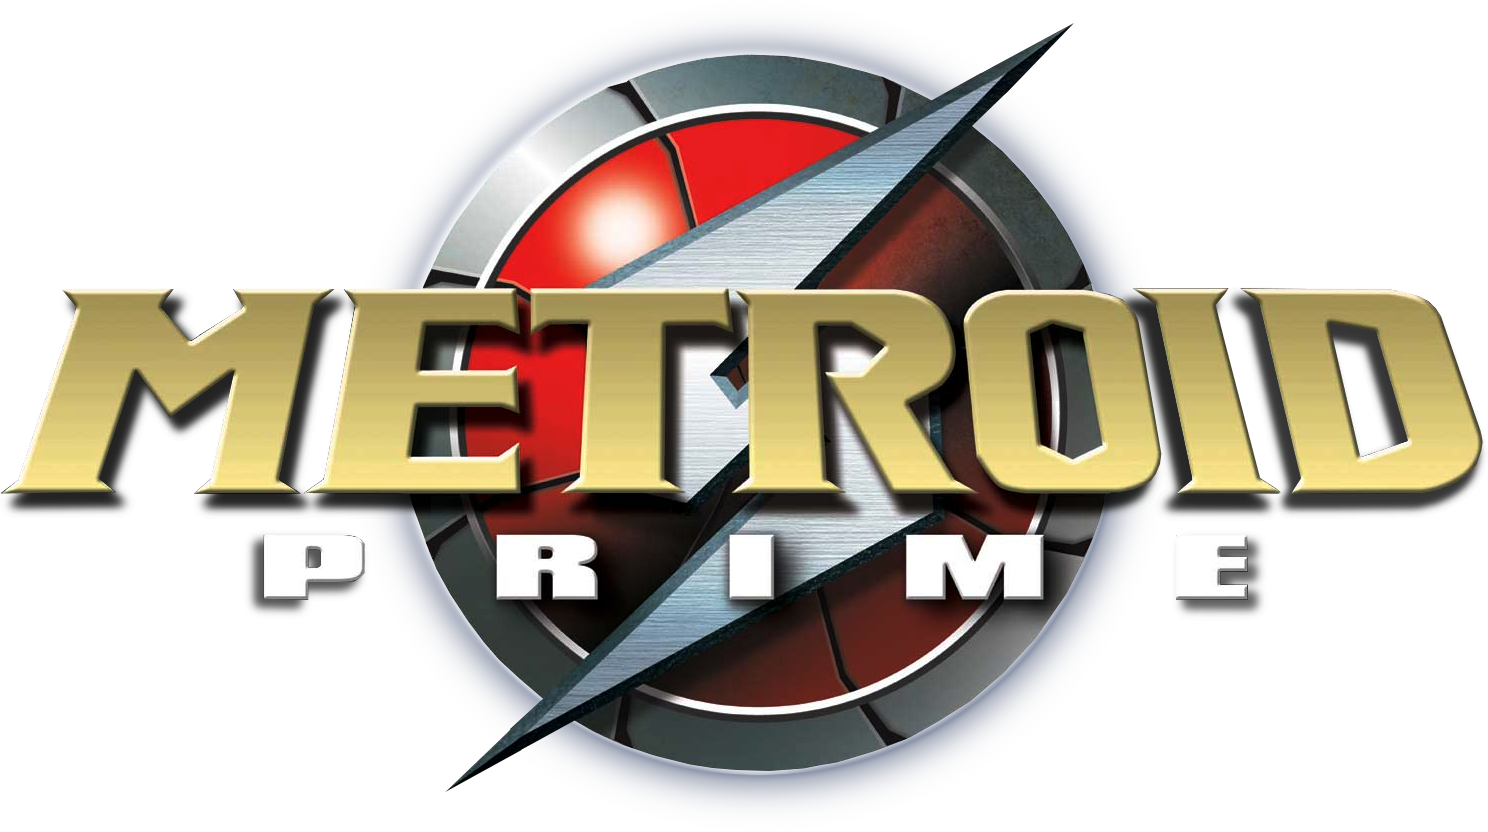 metroid prime remastered logbook